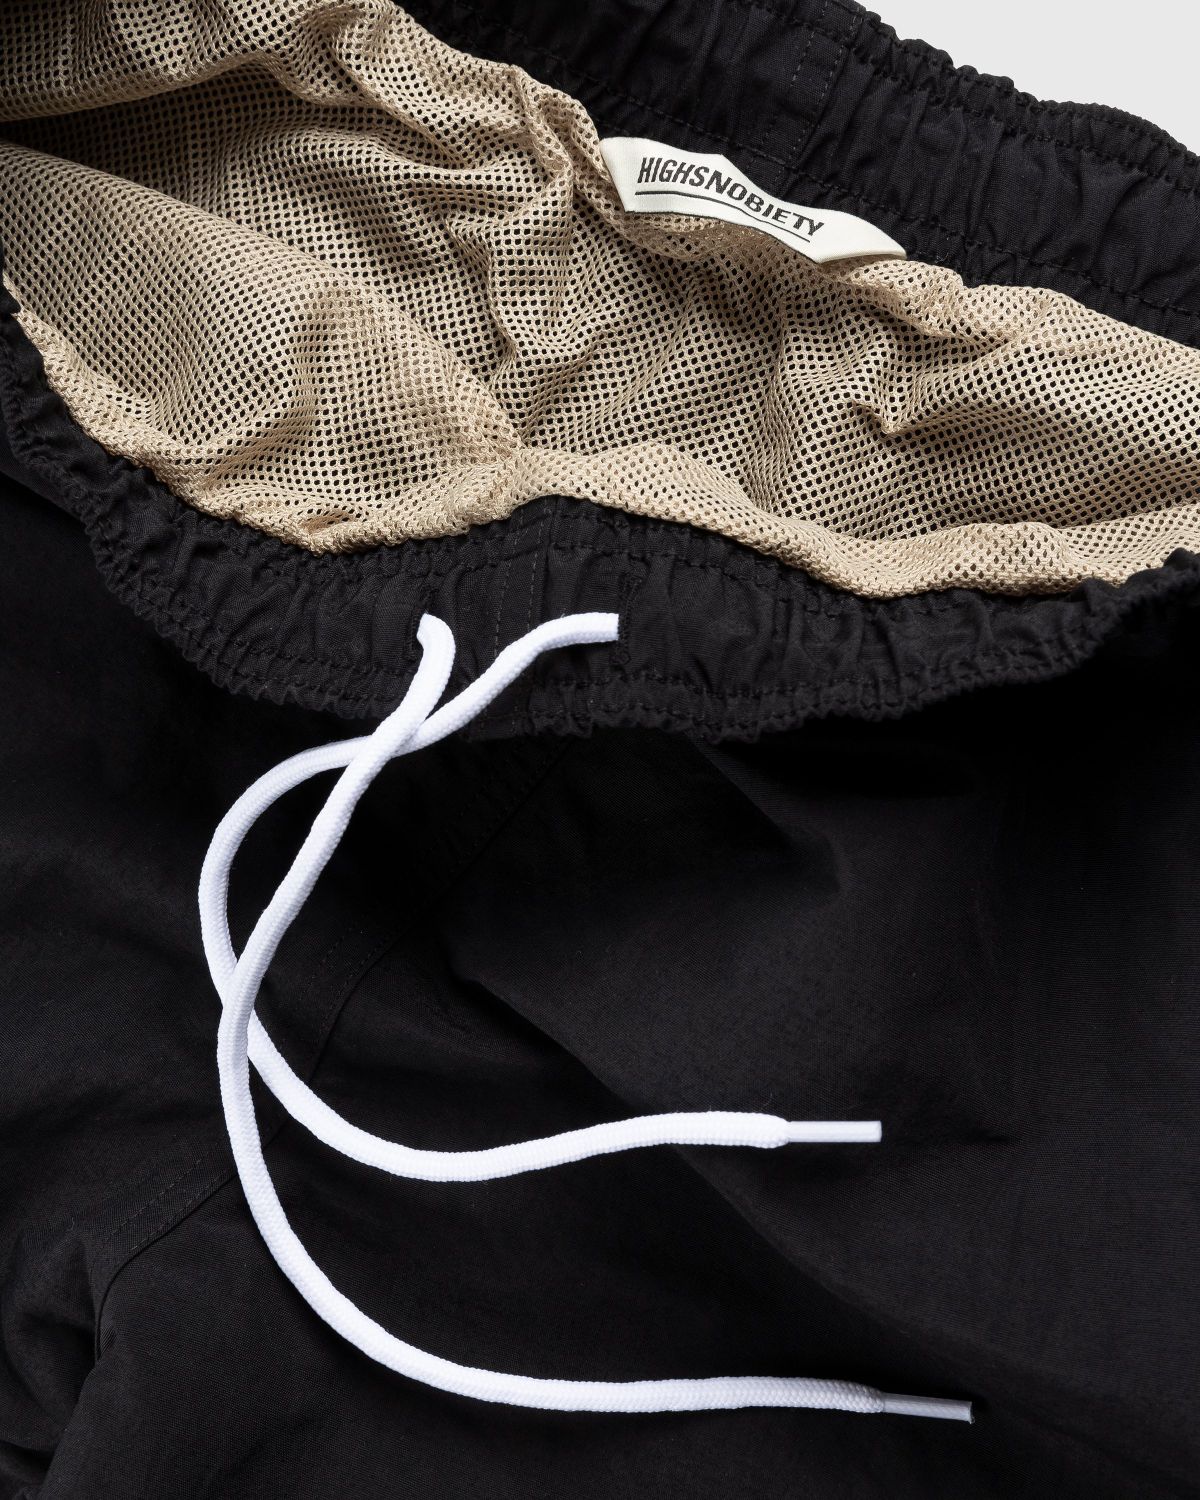 RUF x Highsnobiety – Water Shorts Black - Shorts - Black - Image 6